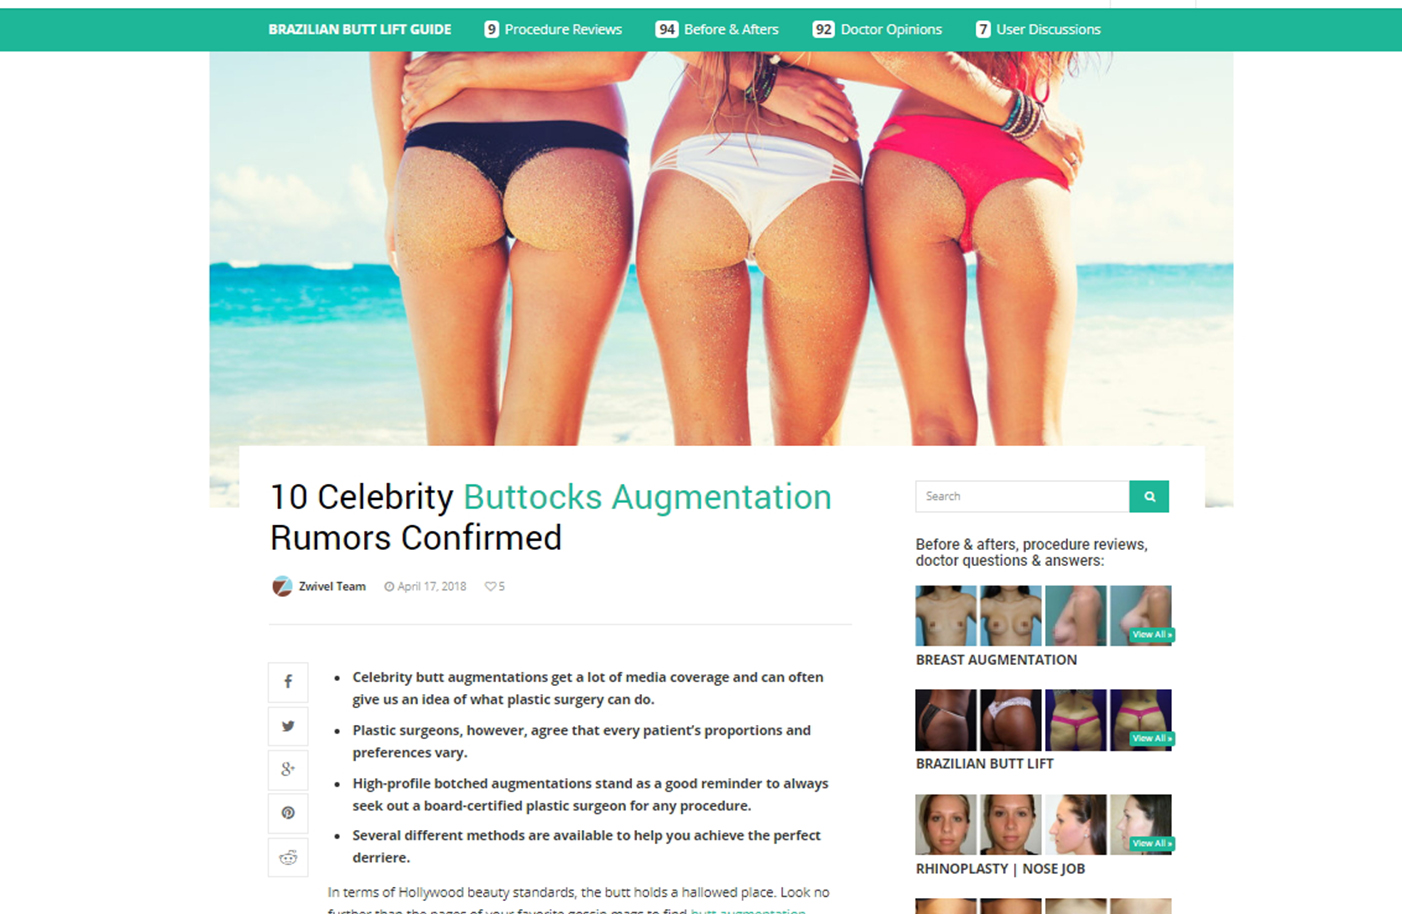 10 Celebrity Buttocks Augmentation Rumors Confirmed